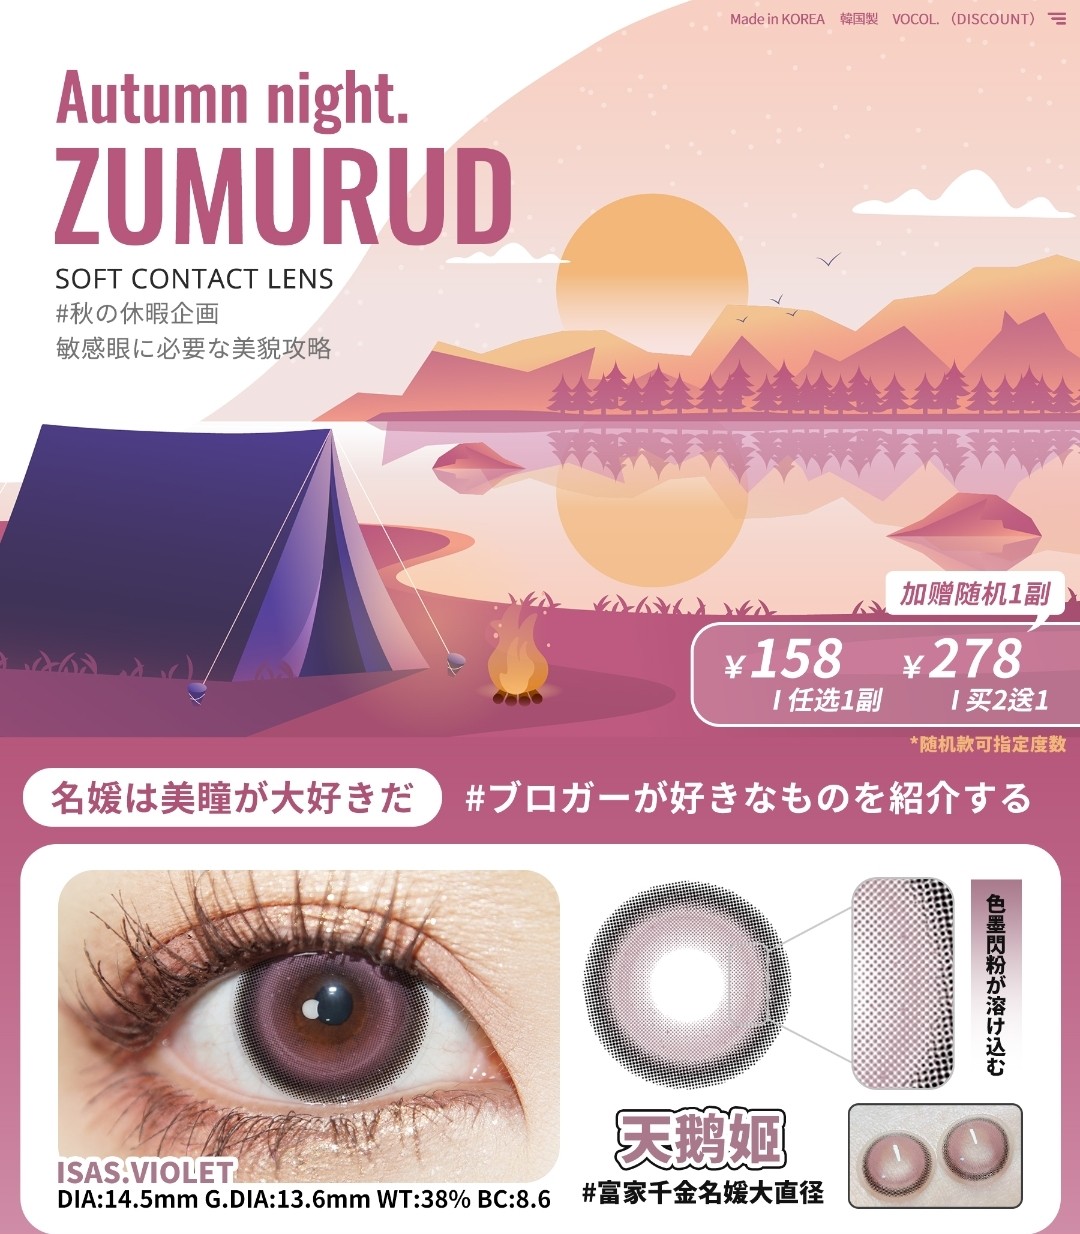 ZUMURUD“敏感眼攻略”秋日の游行企画番